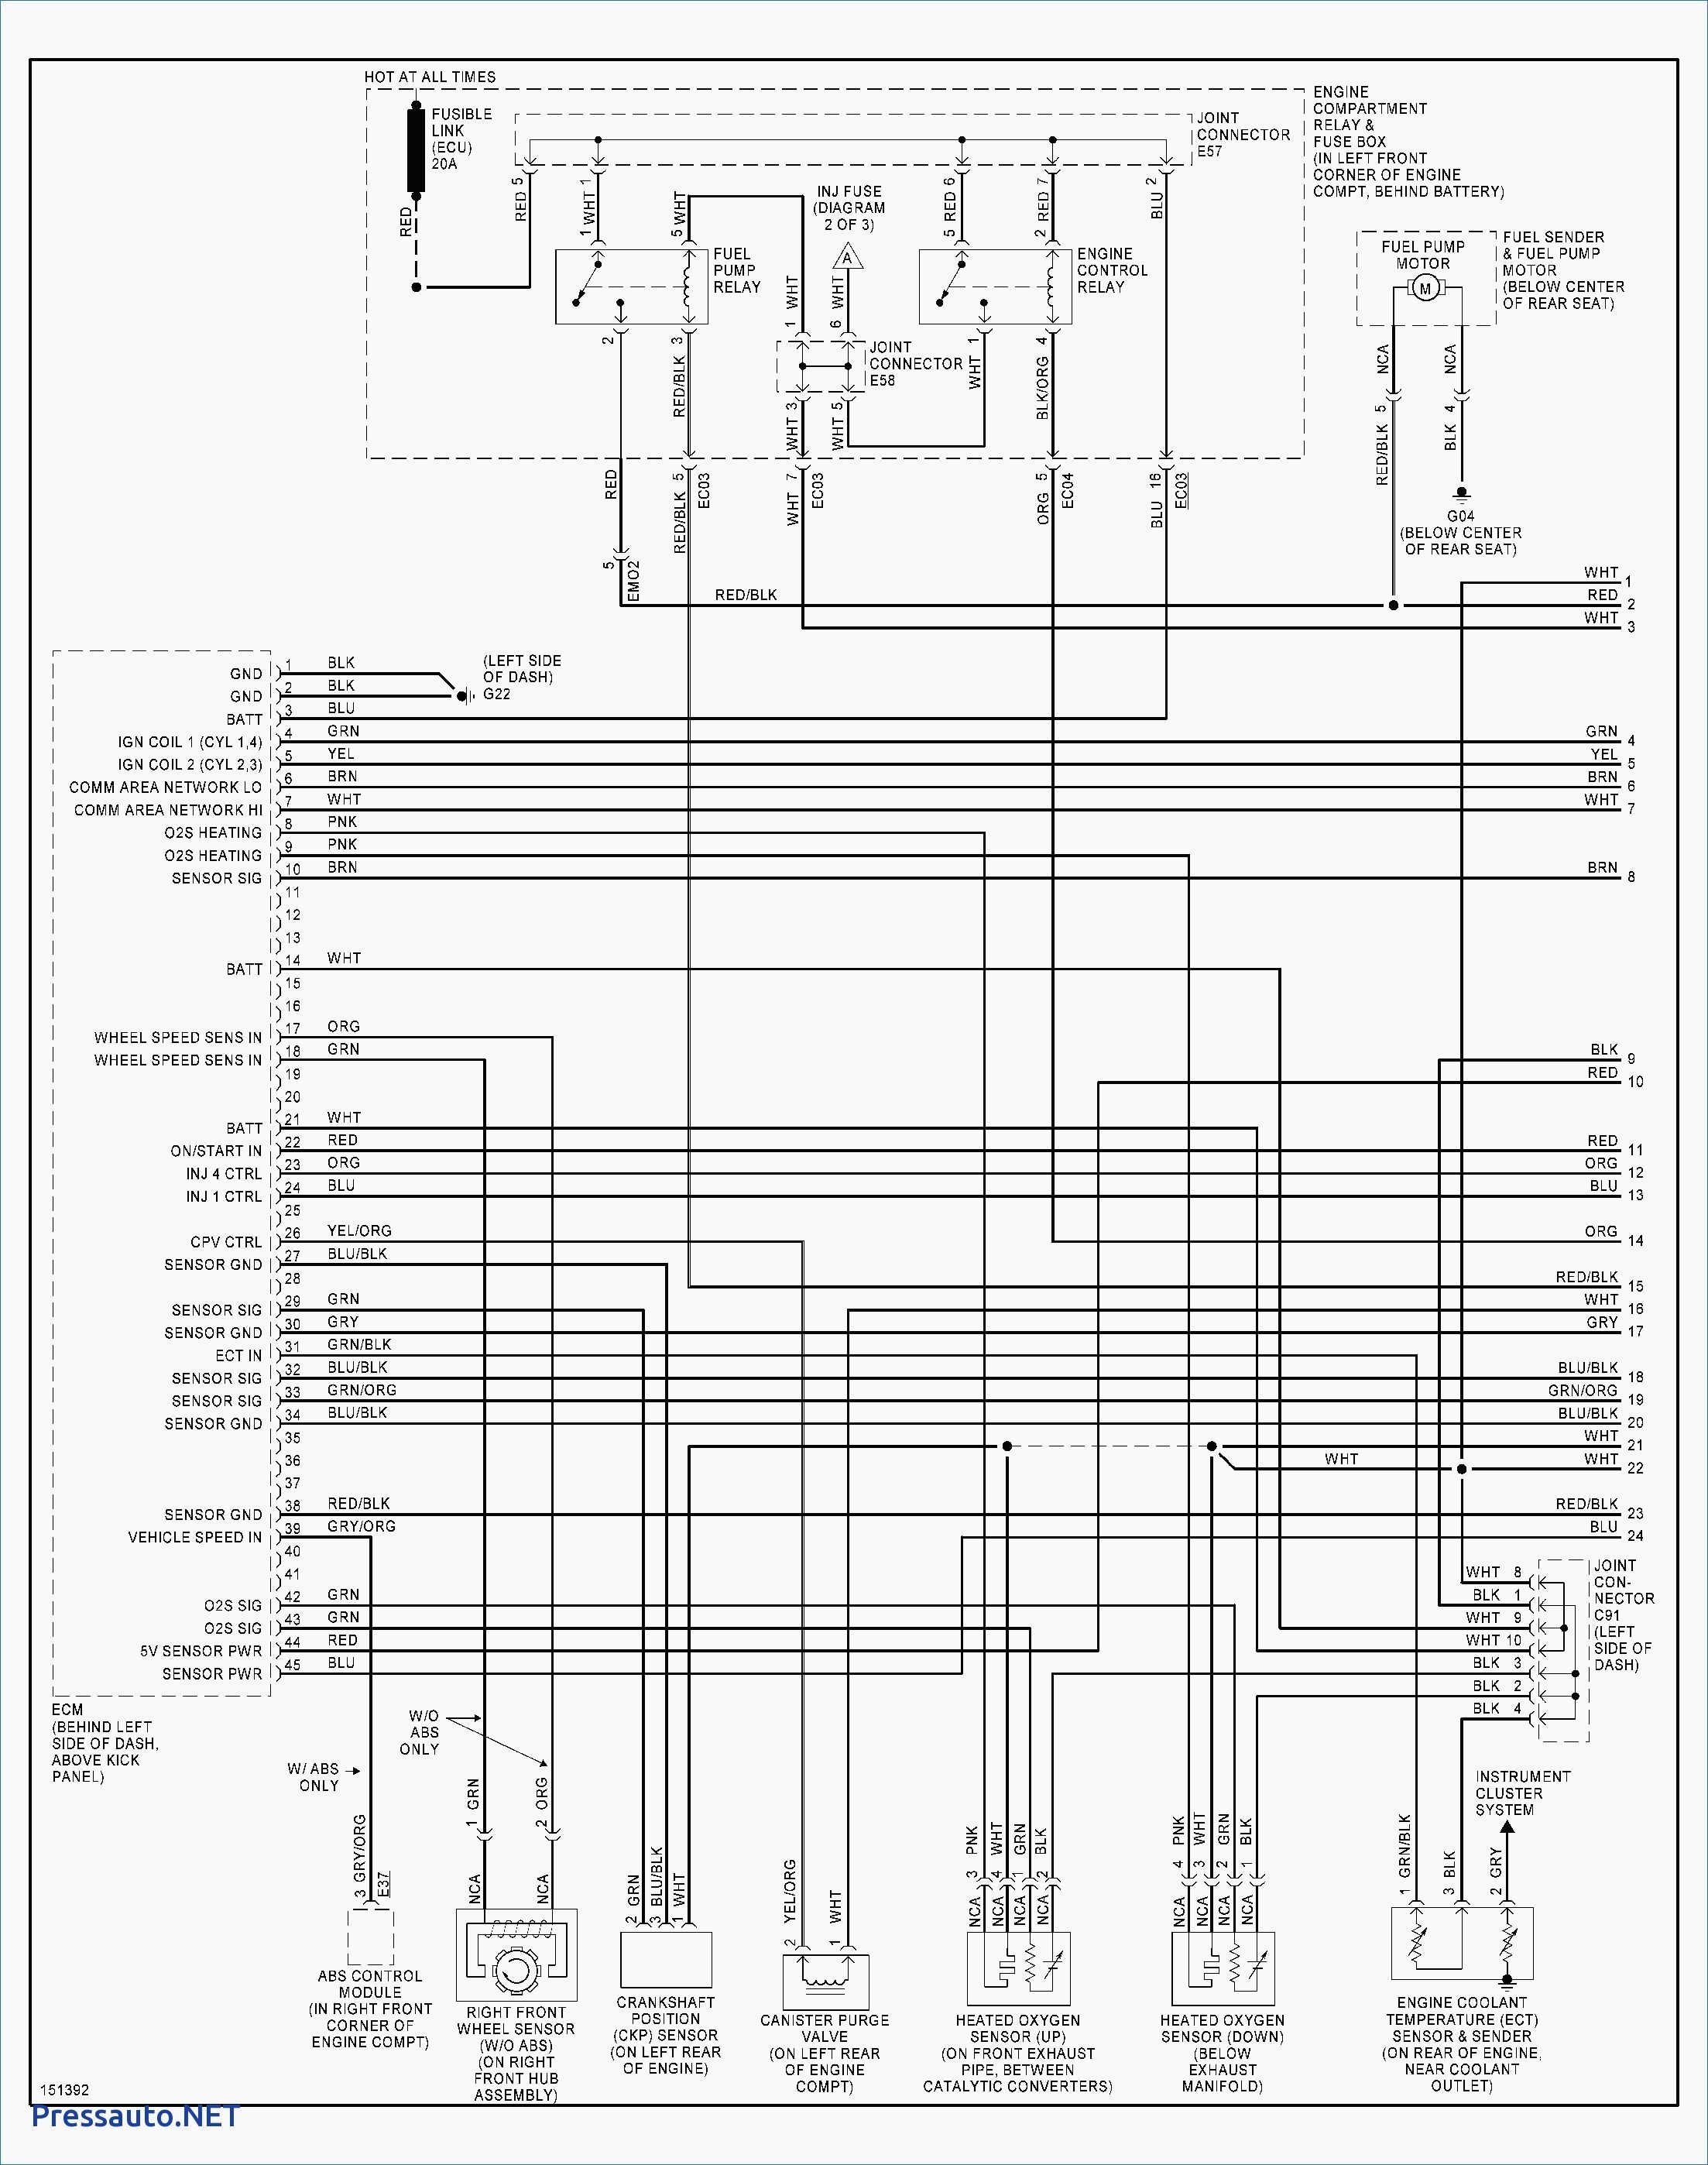 2002 Hyundai Accent Engine Diagram 1997 Hyundai Elantra Engine Diagram Wiring Diagram Paper Of 2002 Hyundai Accent Engine Diagram